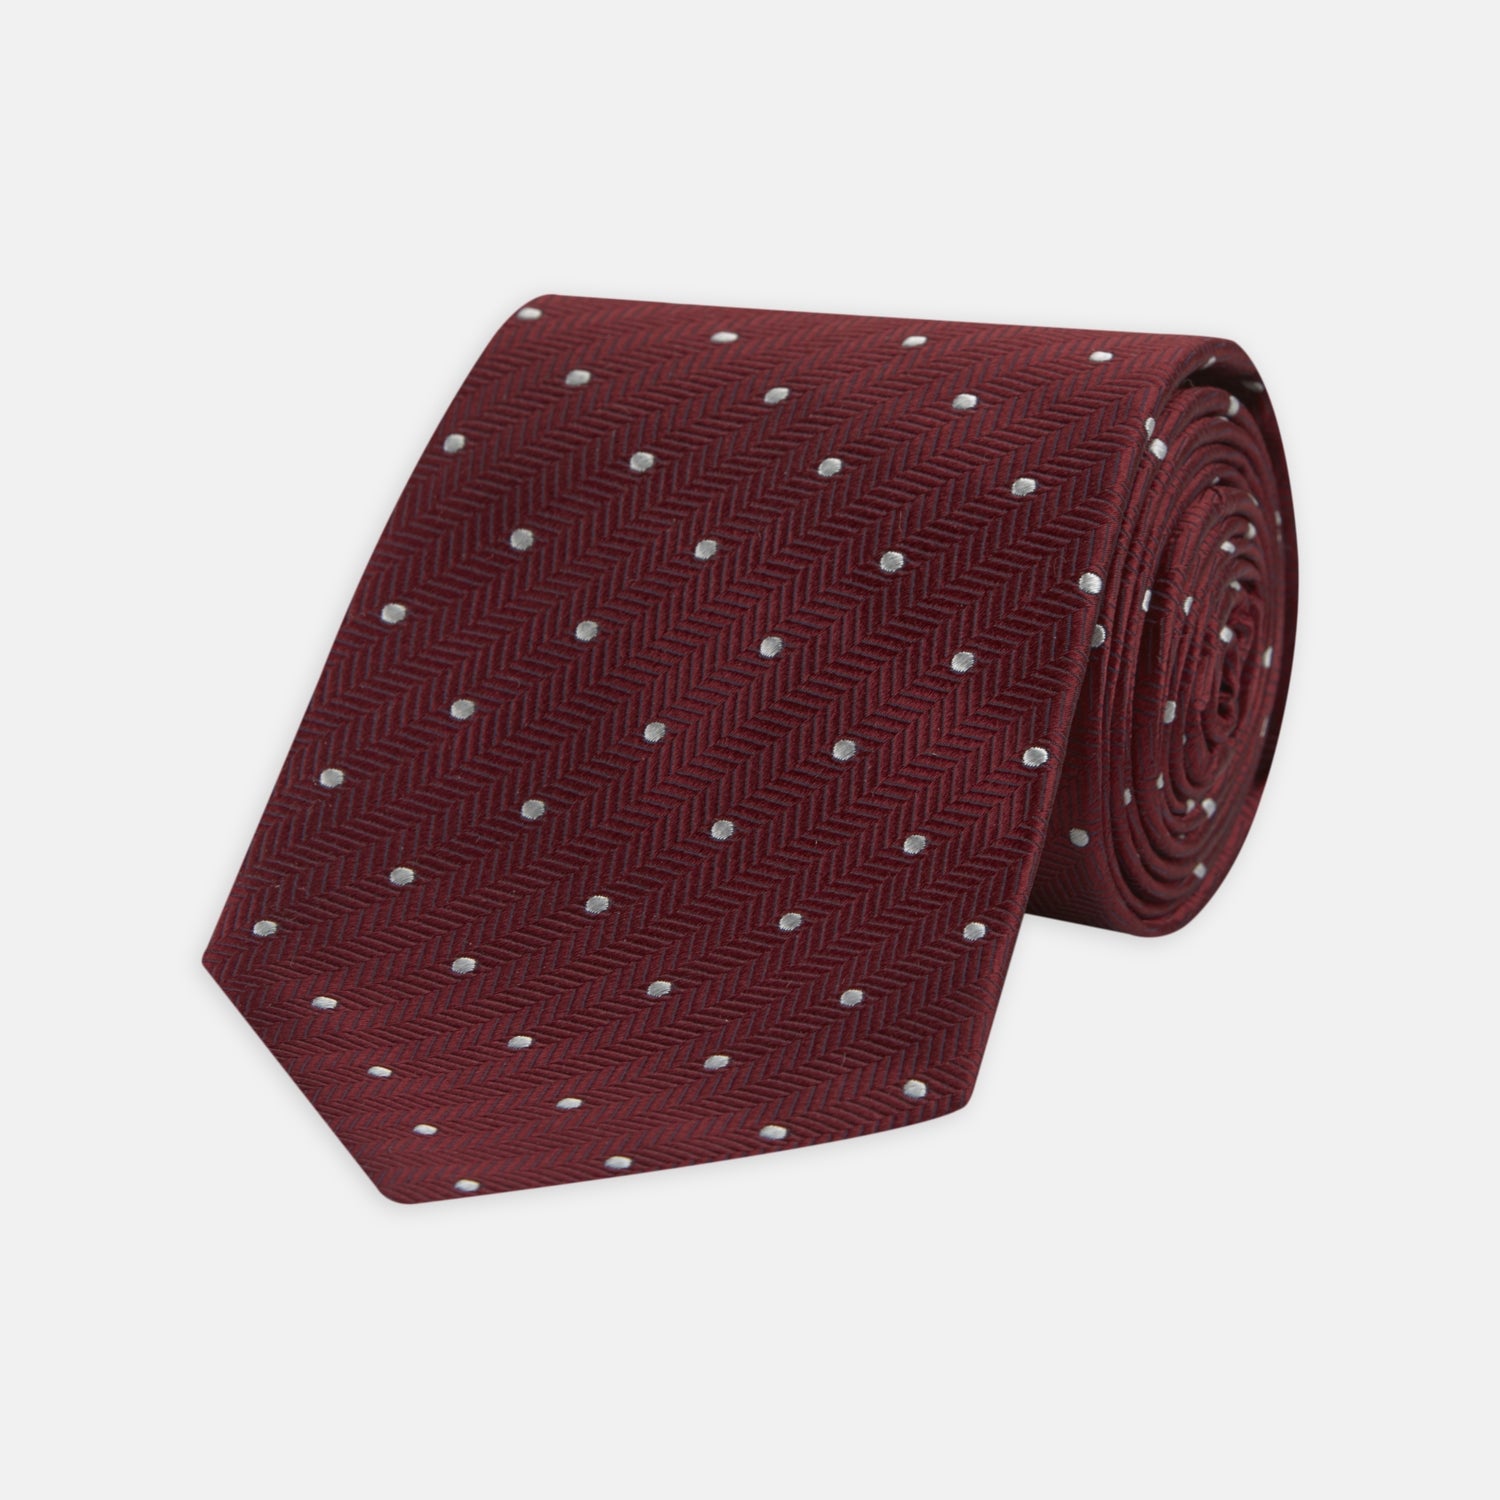 Garnet Red Tie. Woven Herringbone Silk Tie. Jewel Tone Ruby 